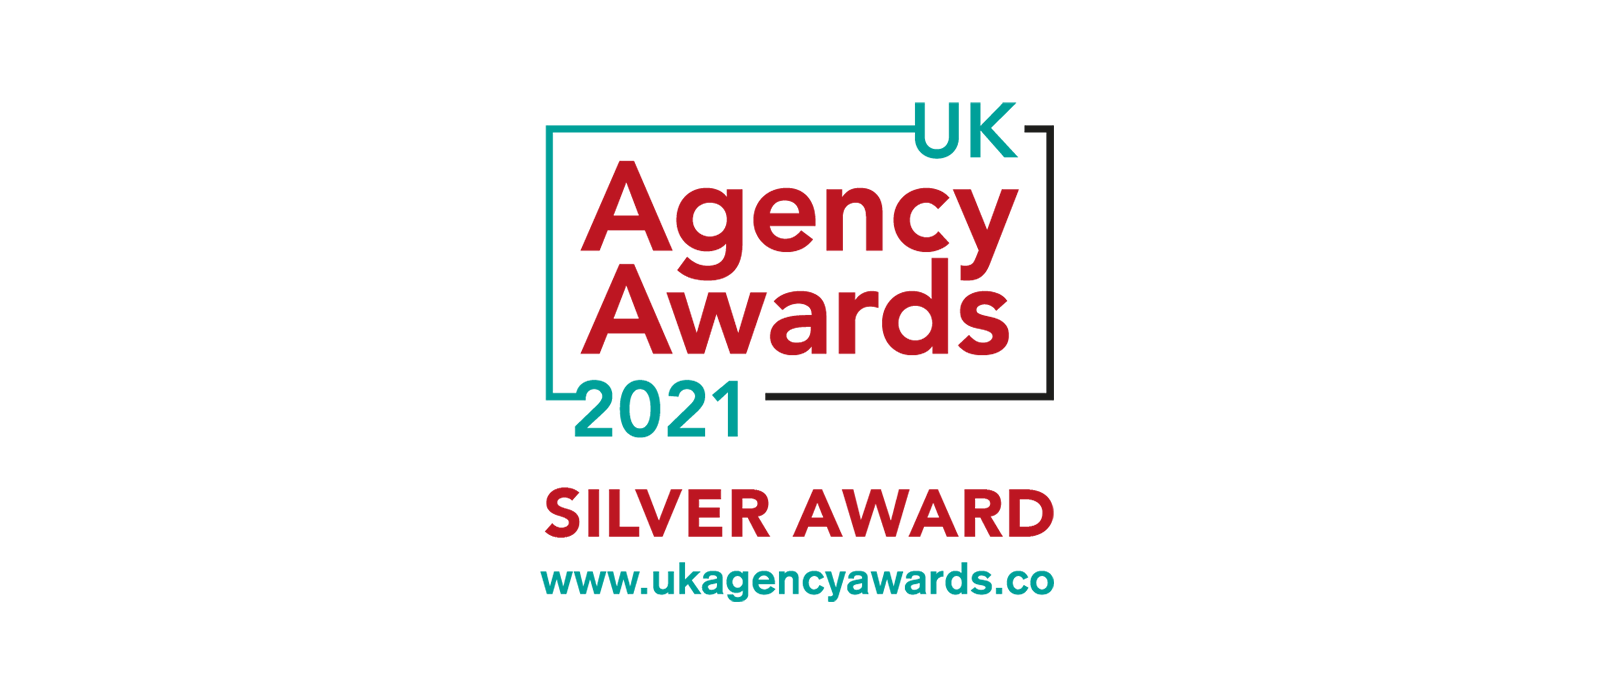 UK Agency Awards 2021 silver